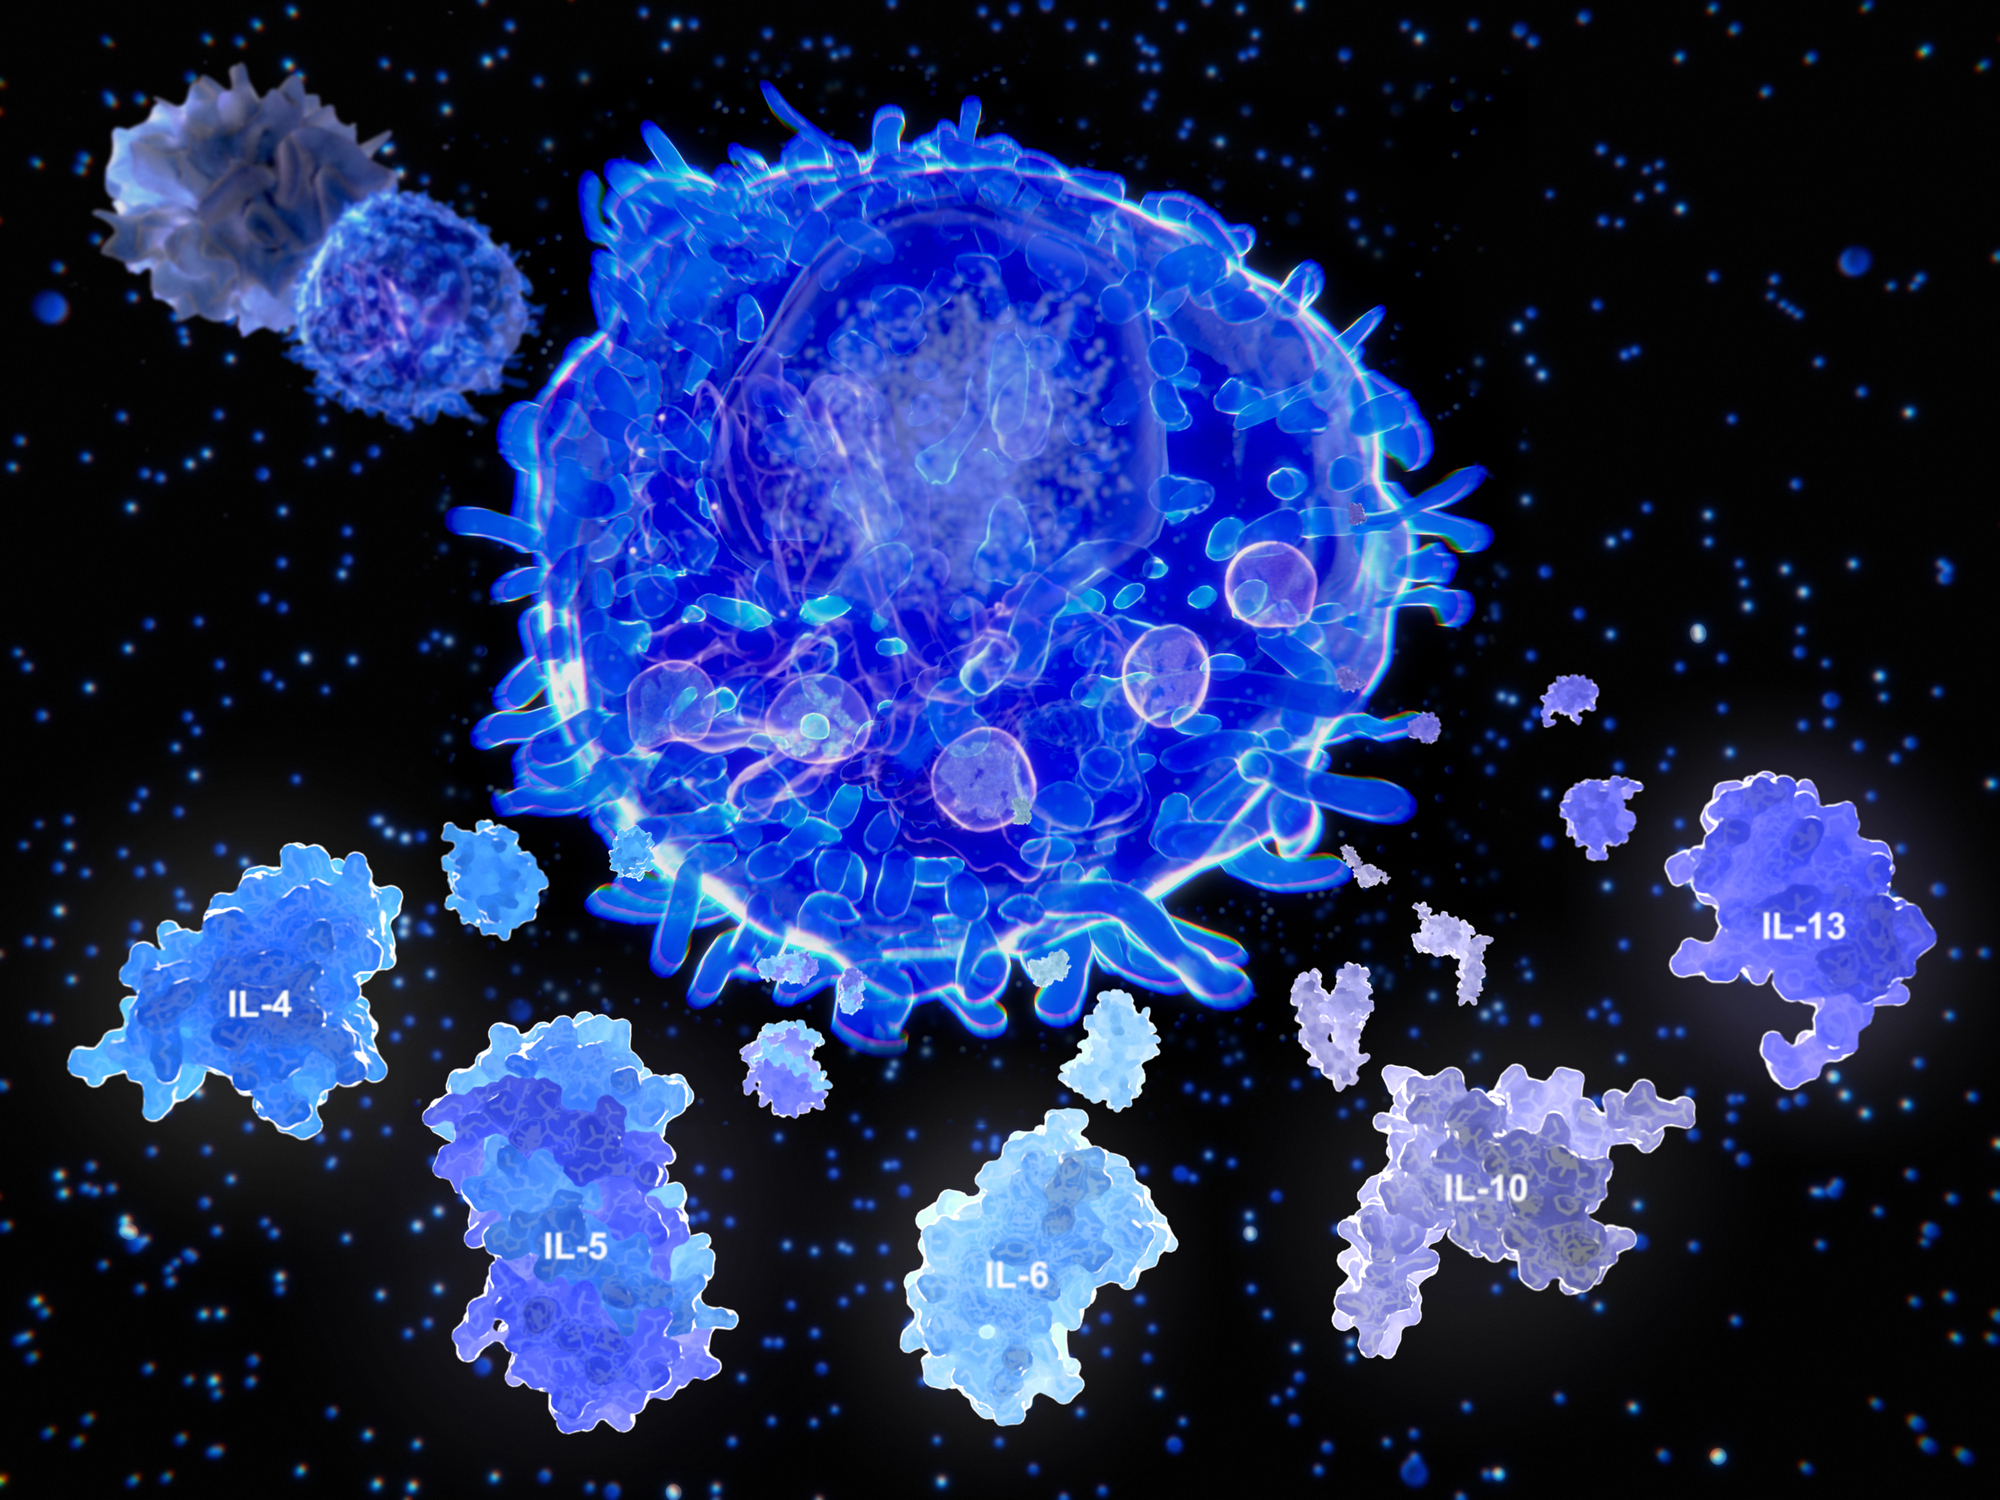 Illustration of a T cell releasing signaling molecules, IL-4, IL-5, IL-6, IL-10, and IL-13